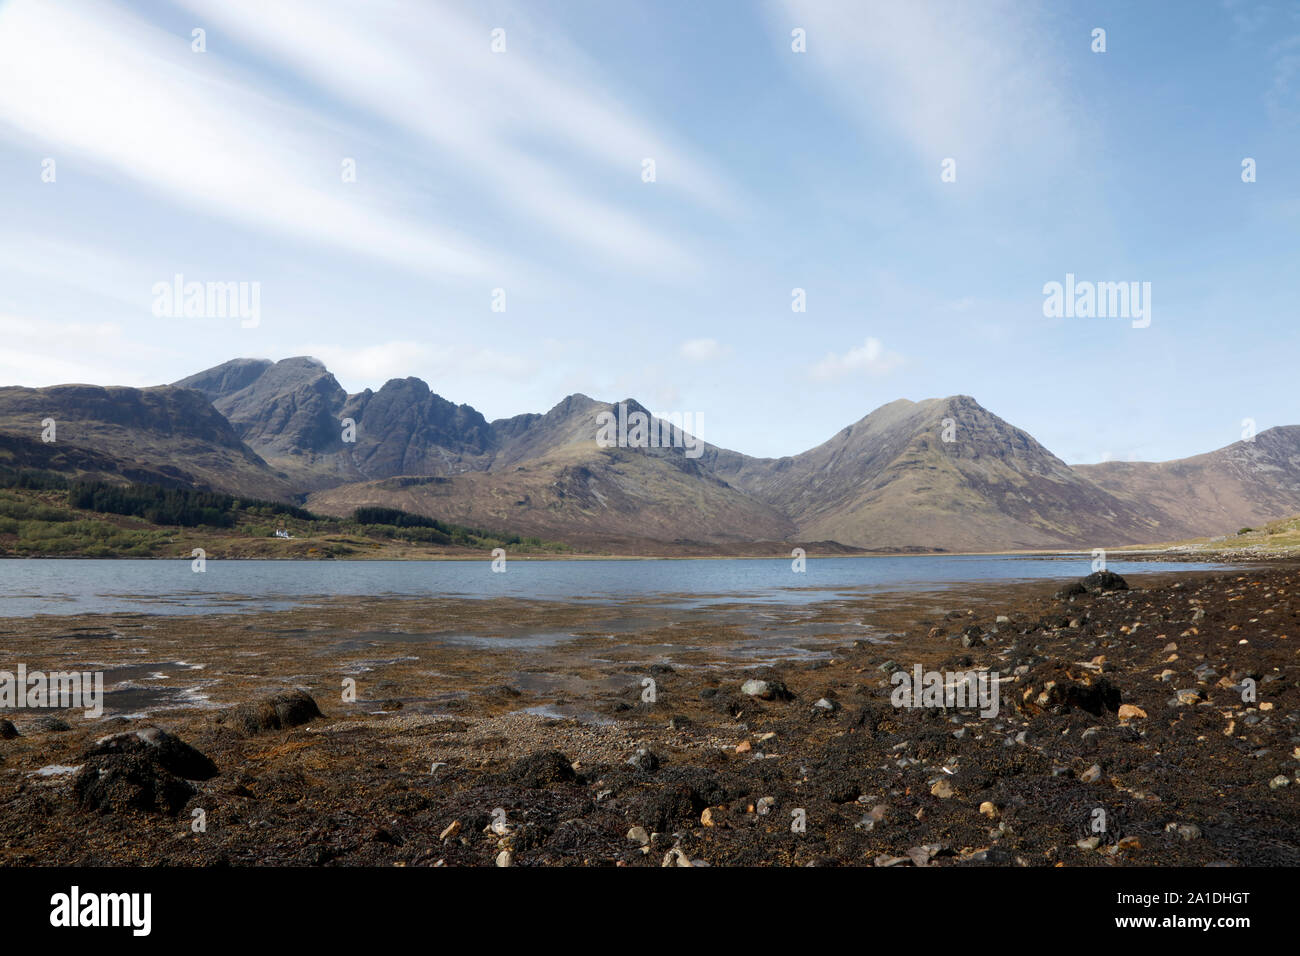 View across Loch Slappin to Bla Bheinn mountain, Isle of Skye, Scotland, UK Stock Photo